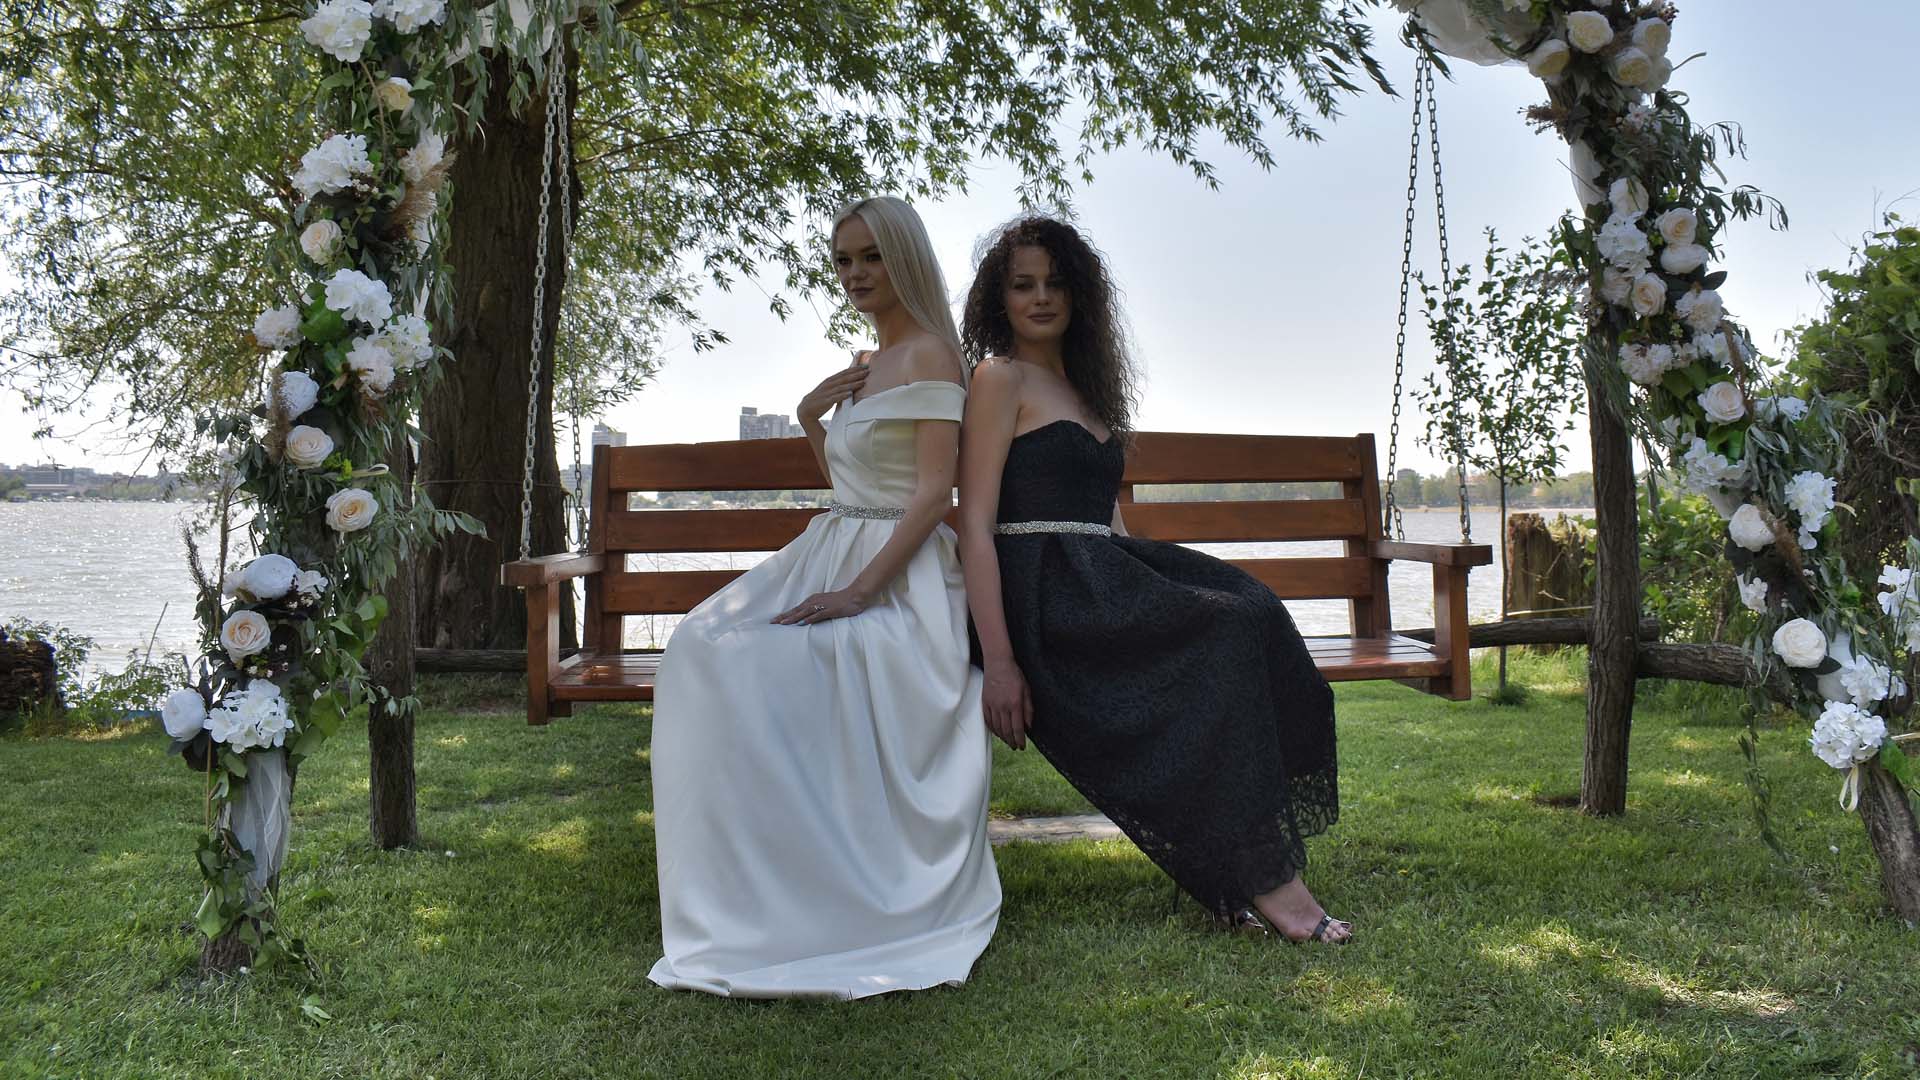 Prodaja svečanih haljina Beograd - Elegantne svečane haljine